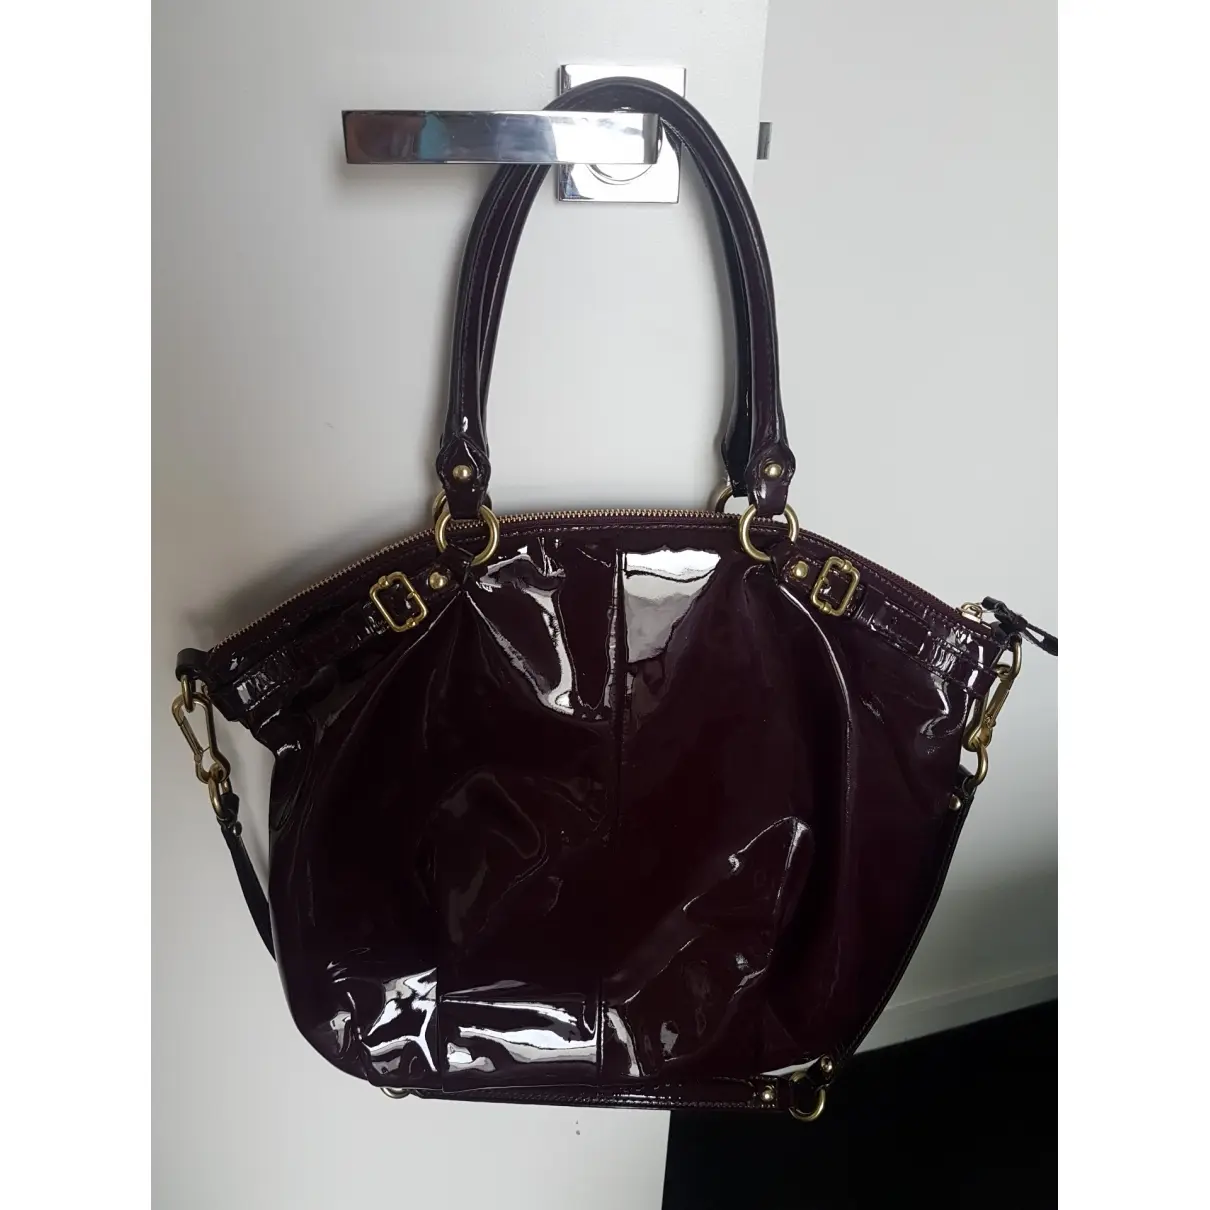 Buy Coach Madison patent leather handbag online